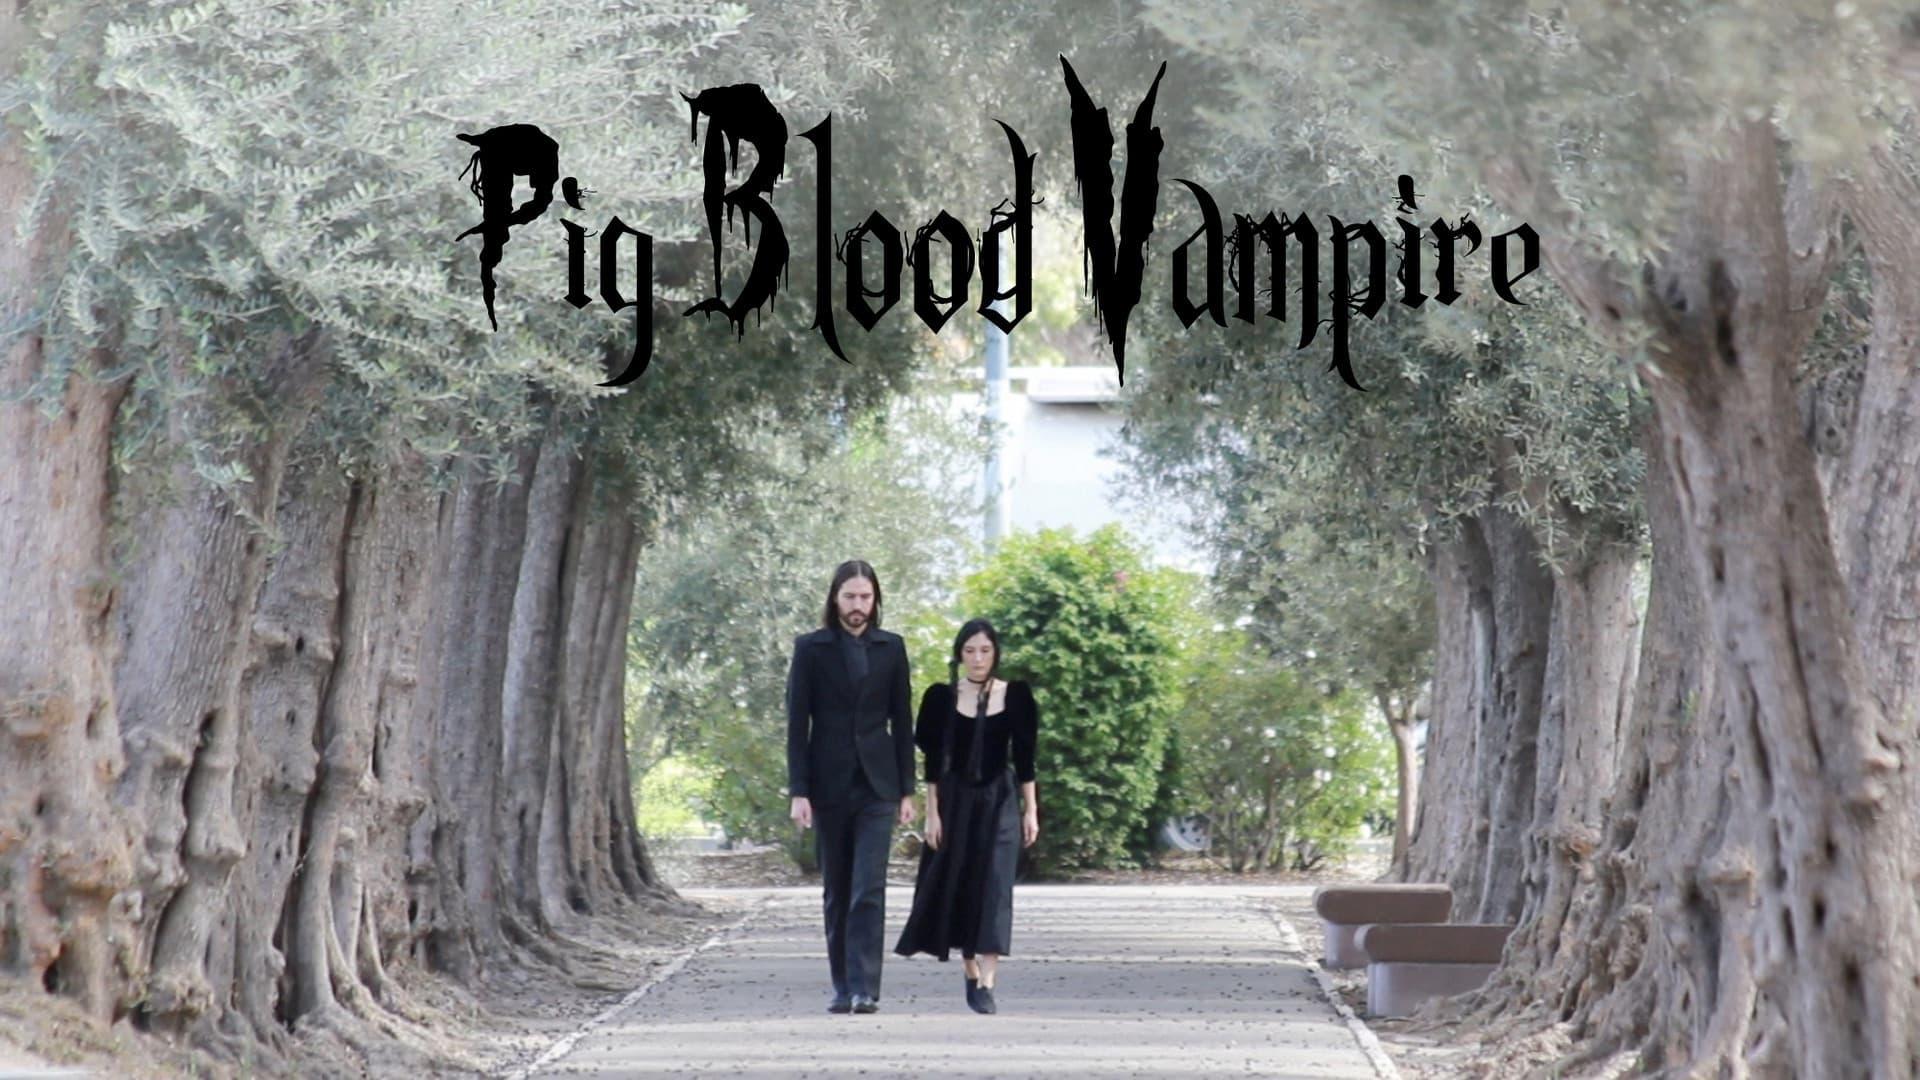 Pig Blood Vampire backdrop